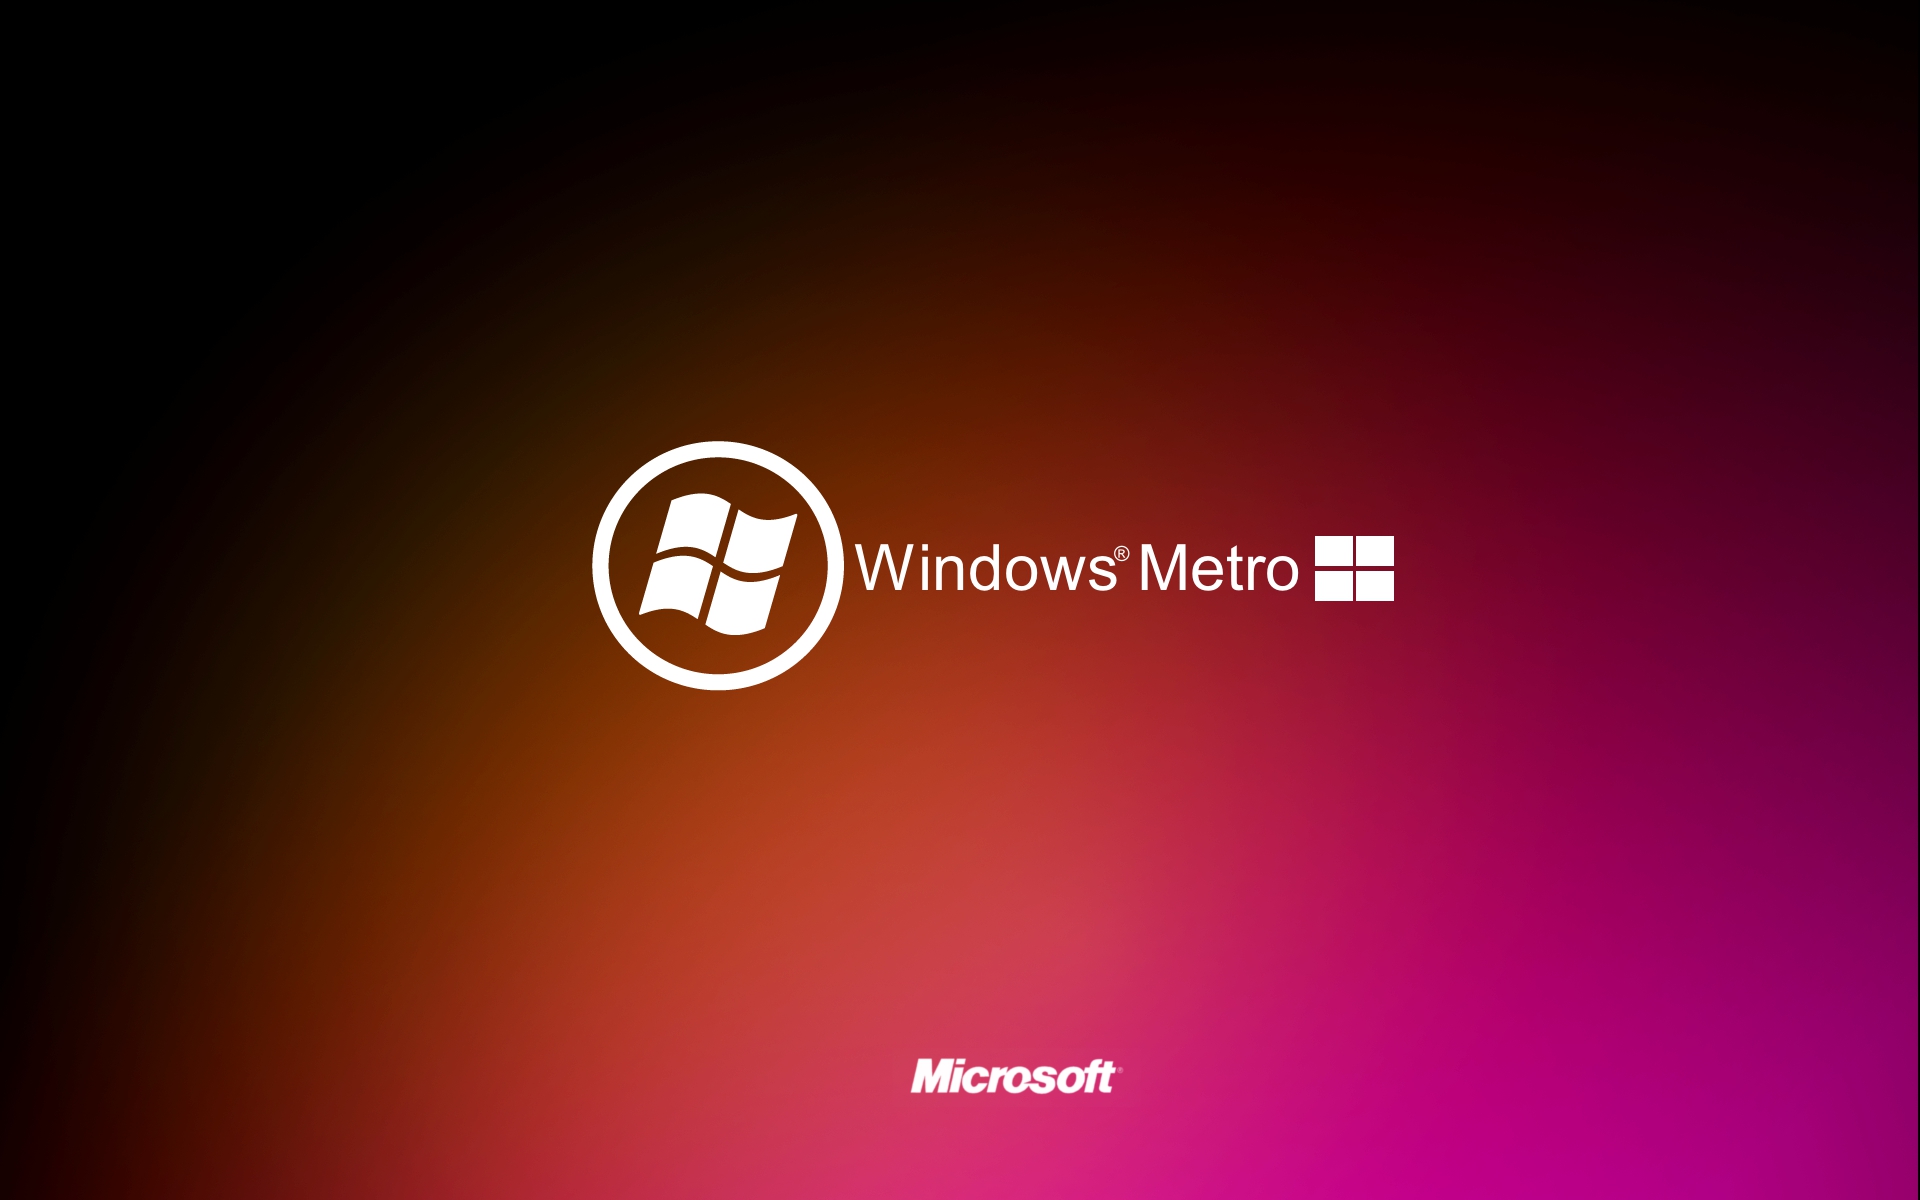 Windows Metro